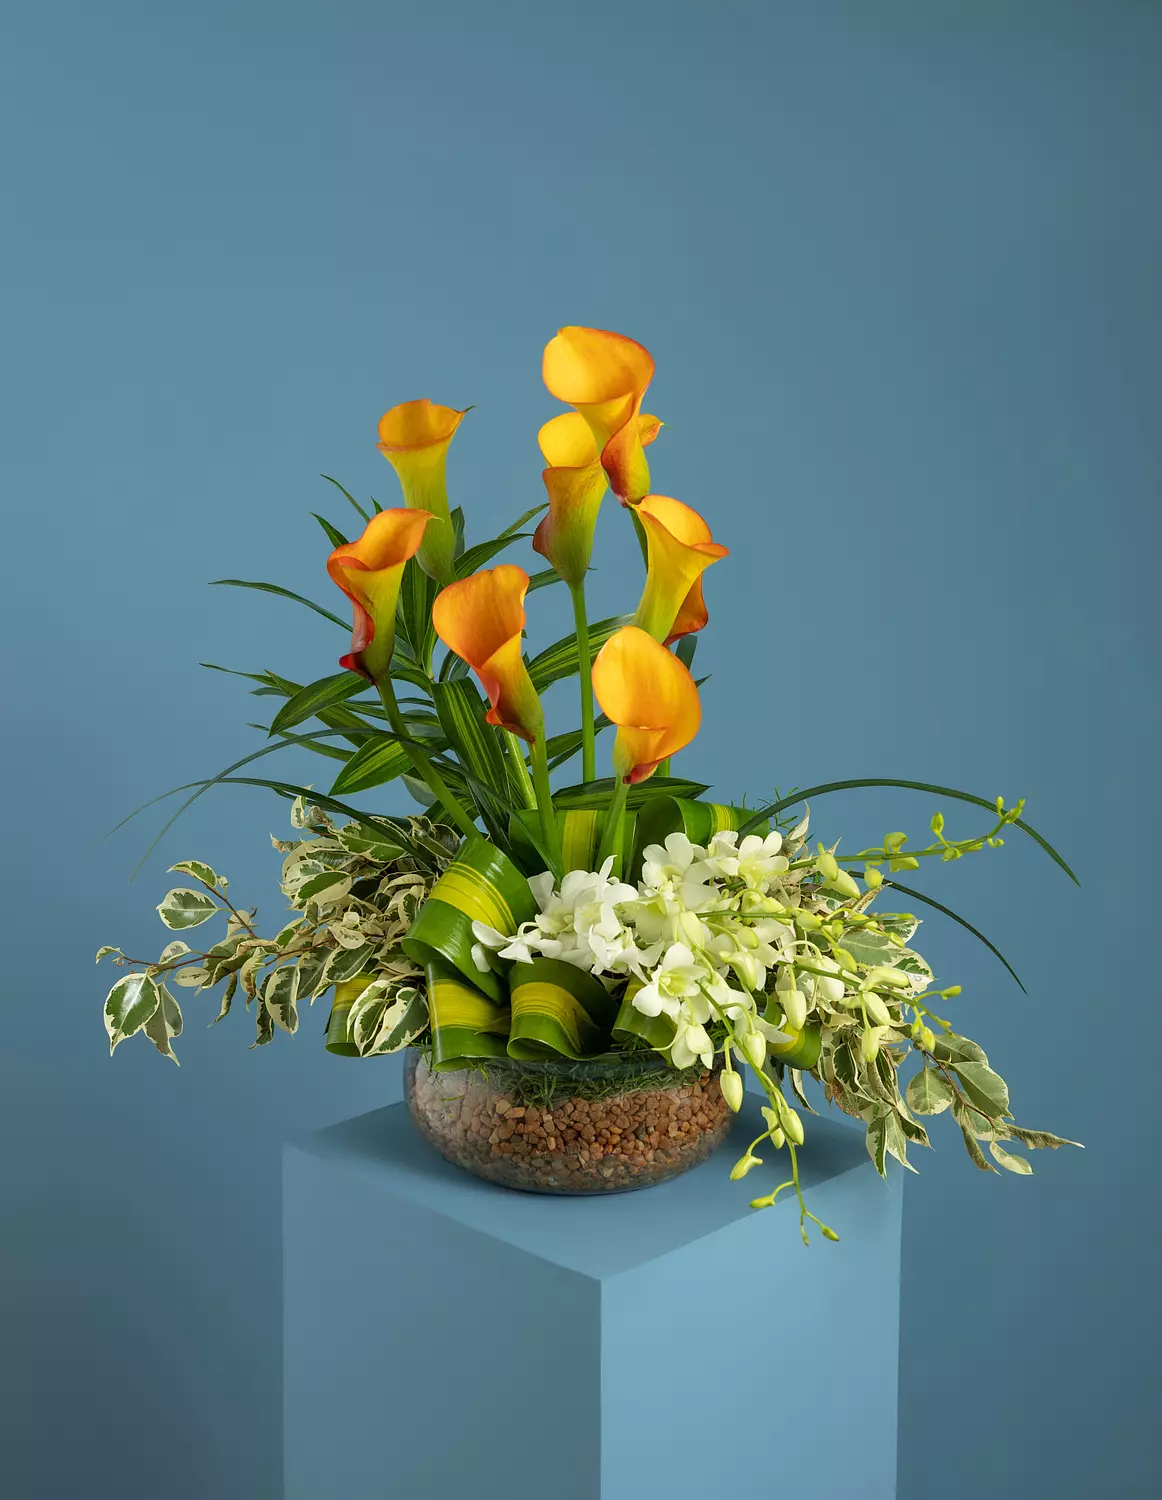 Growing Love Flower Vase hover image